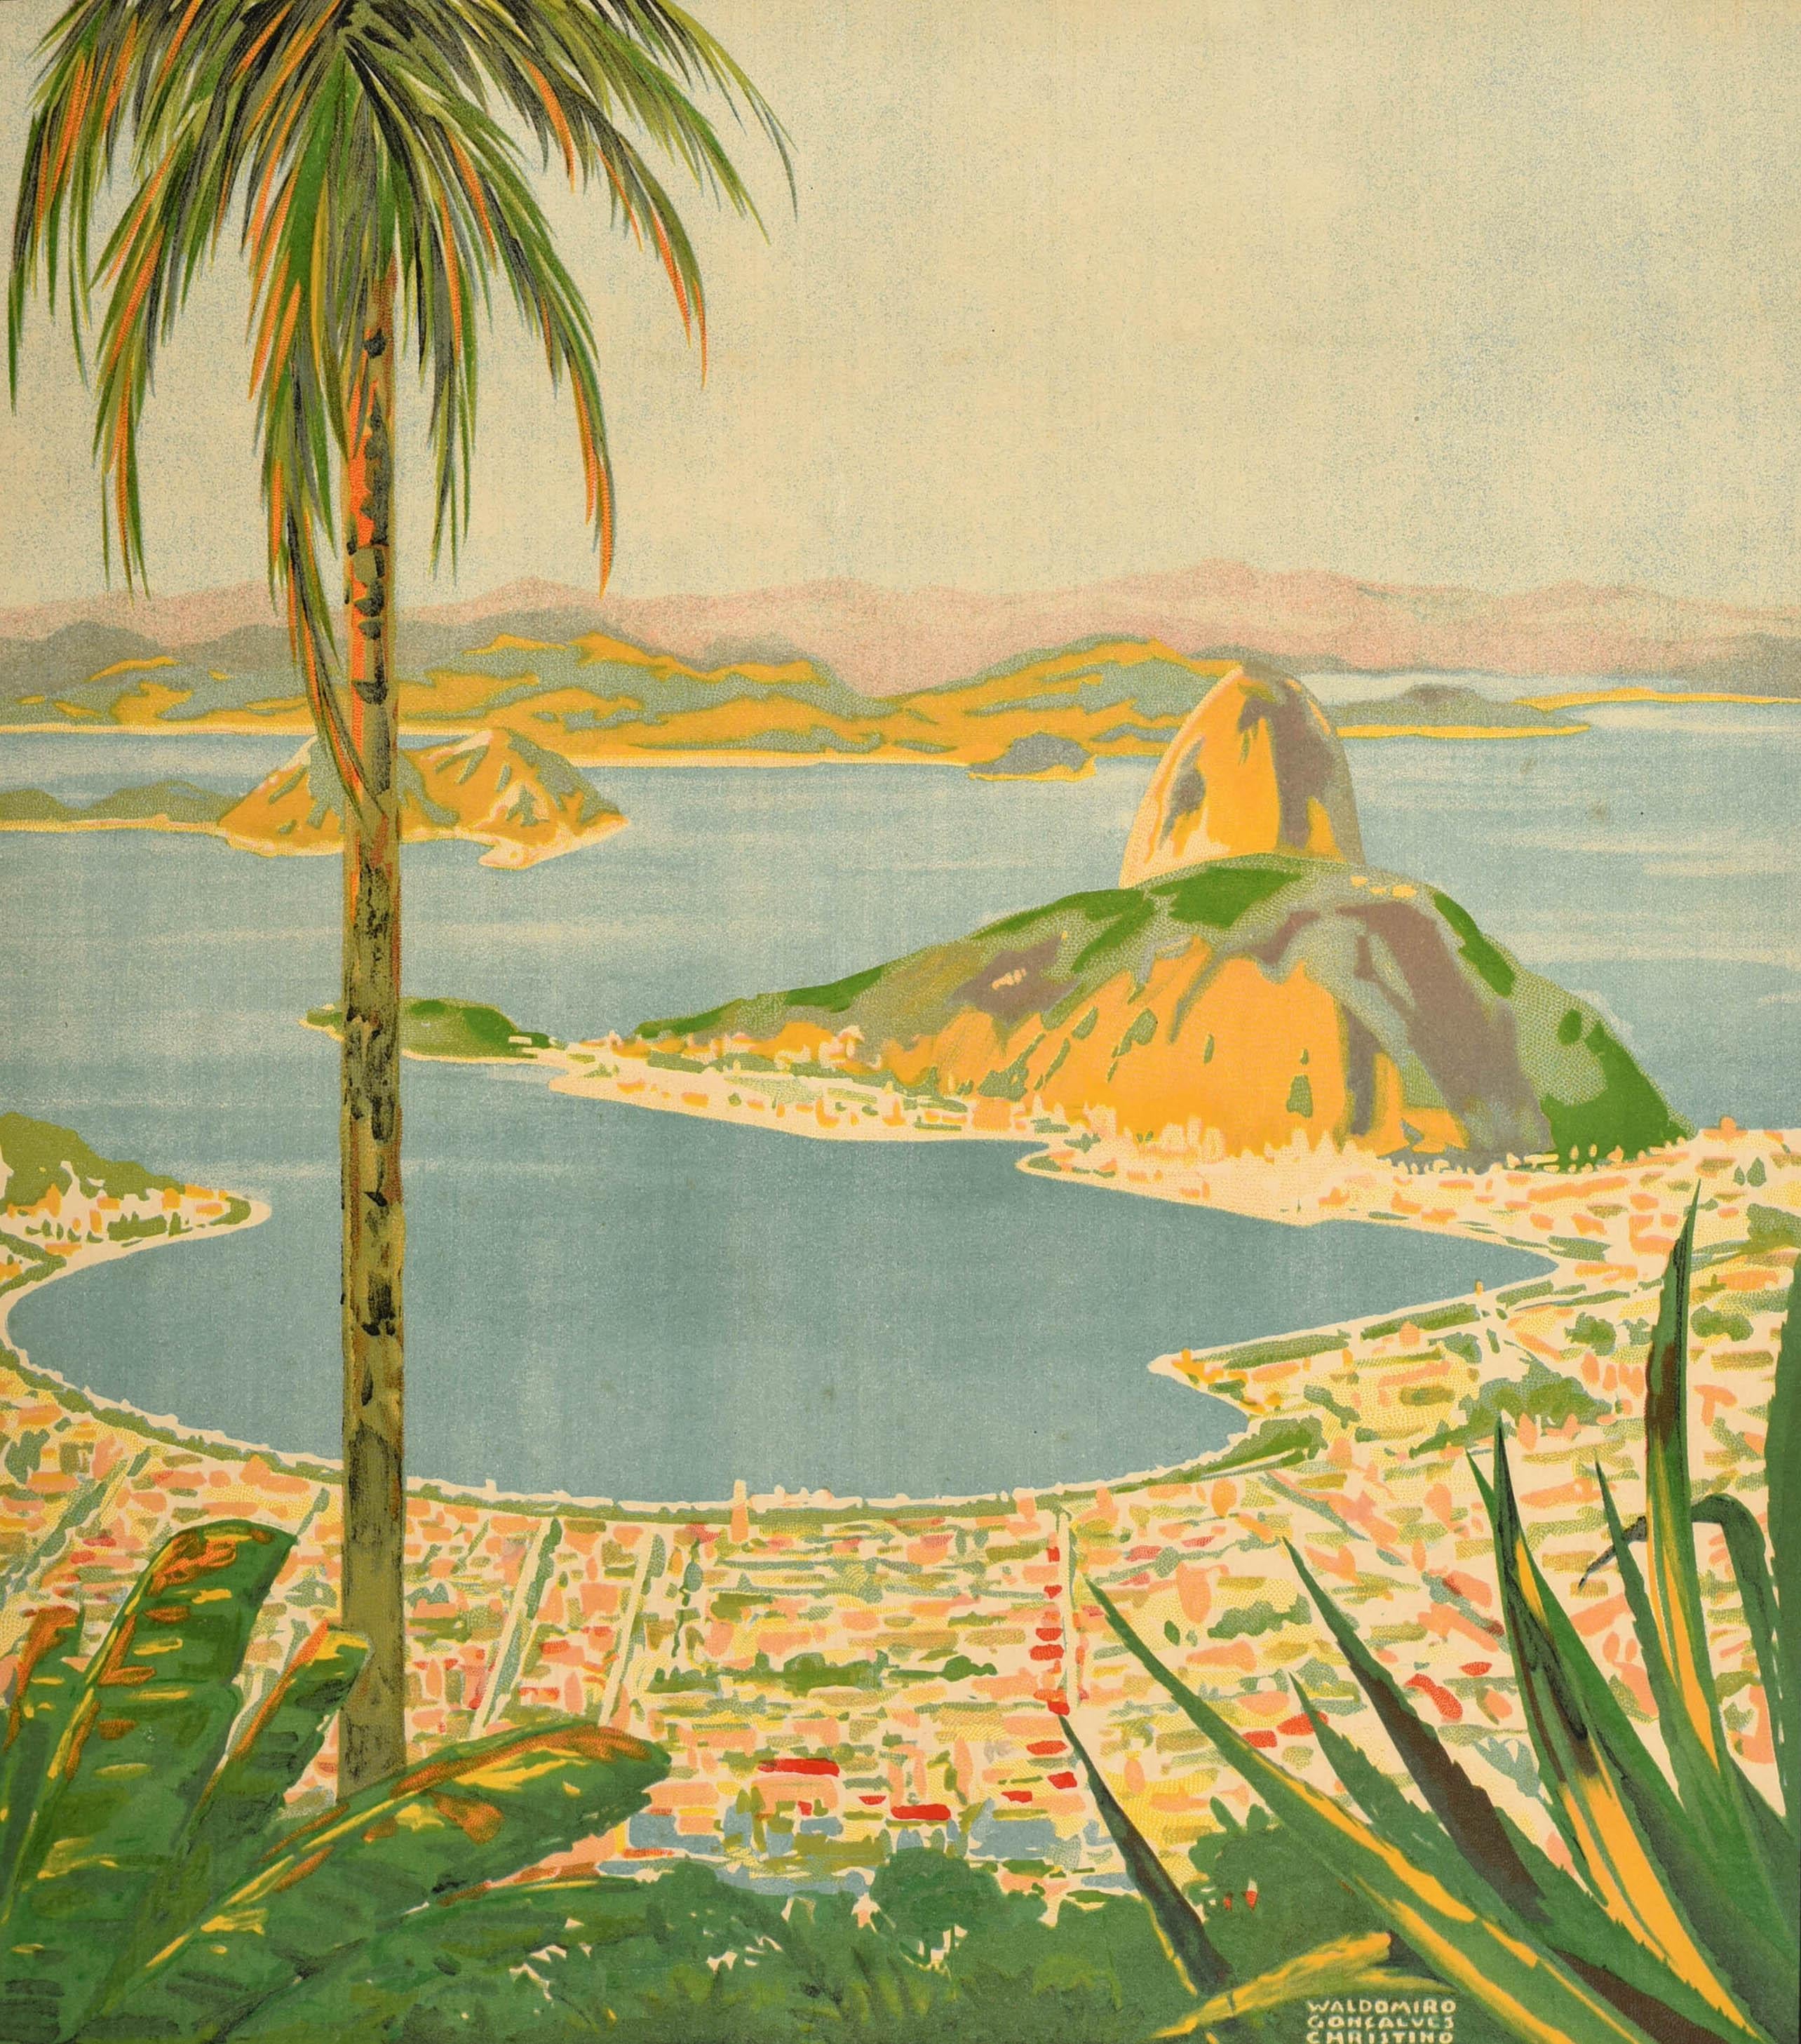 Original Vintage Travel Poster Brazil Rio Guanabara Bay Sugarloaf Mountain Art - Print by Unknown